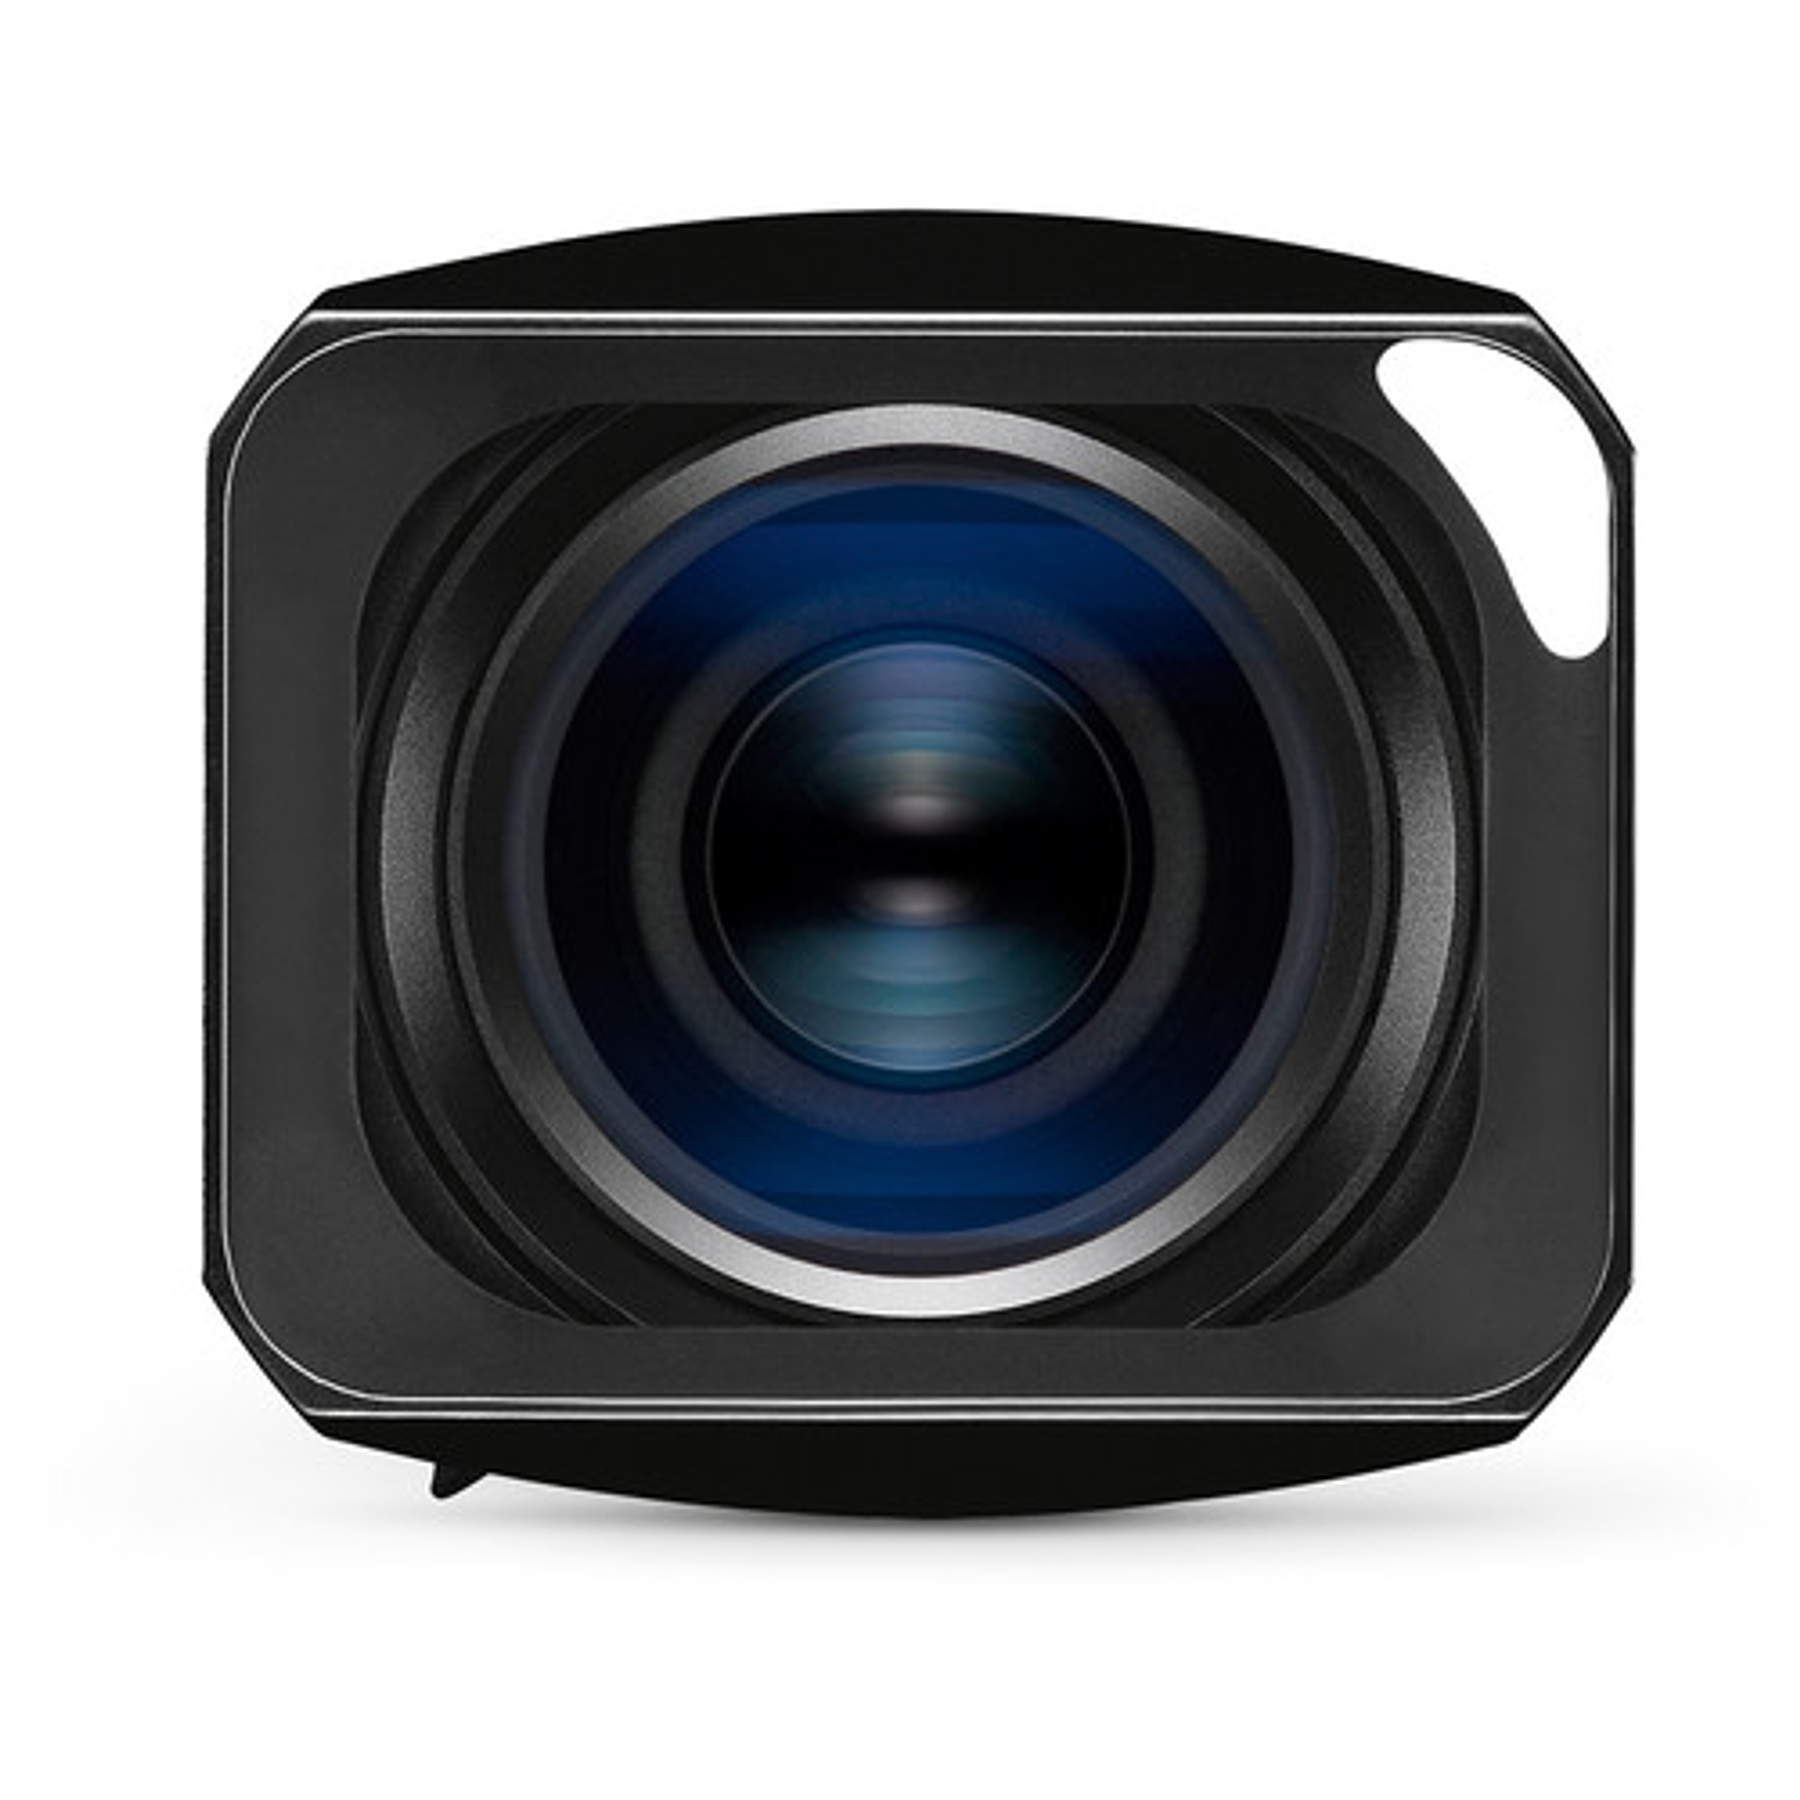 Leica Summilux-M 28mm f/1.4 ASPH